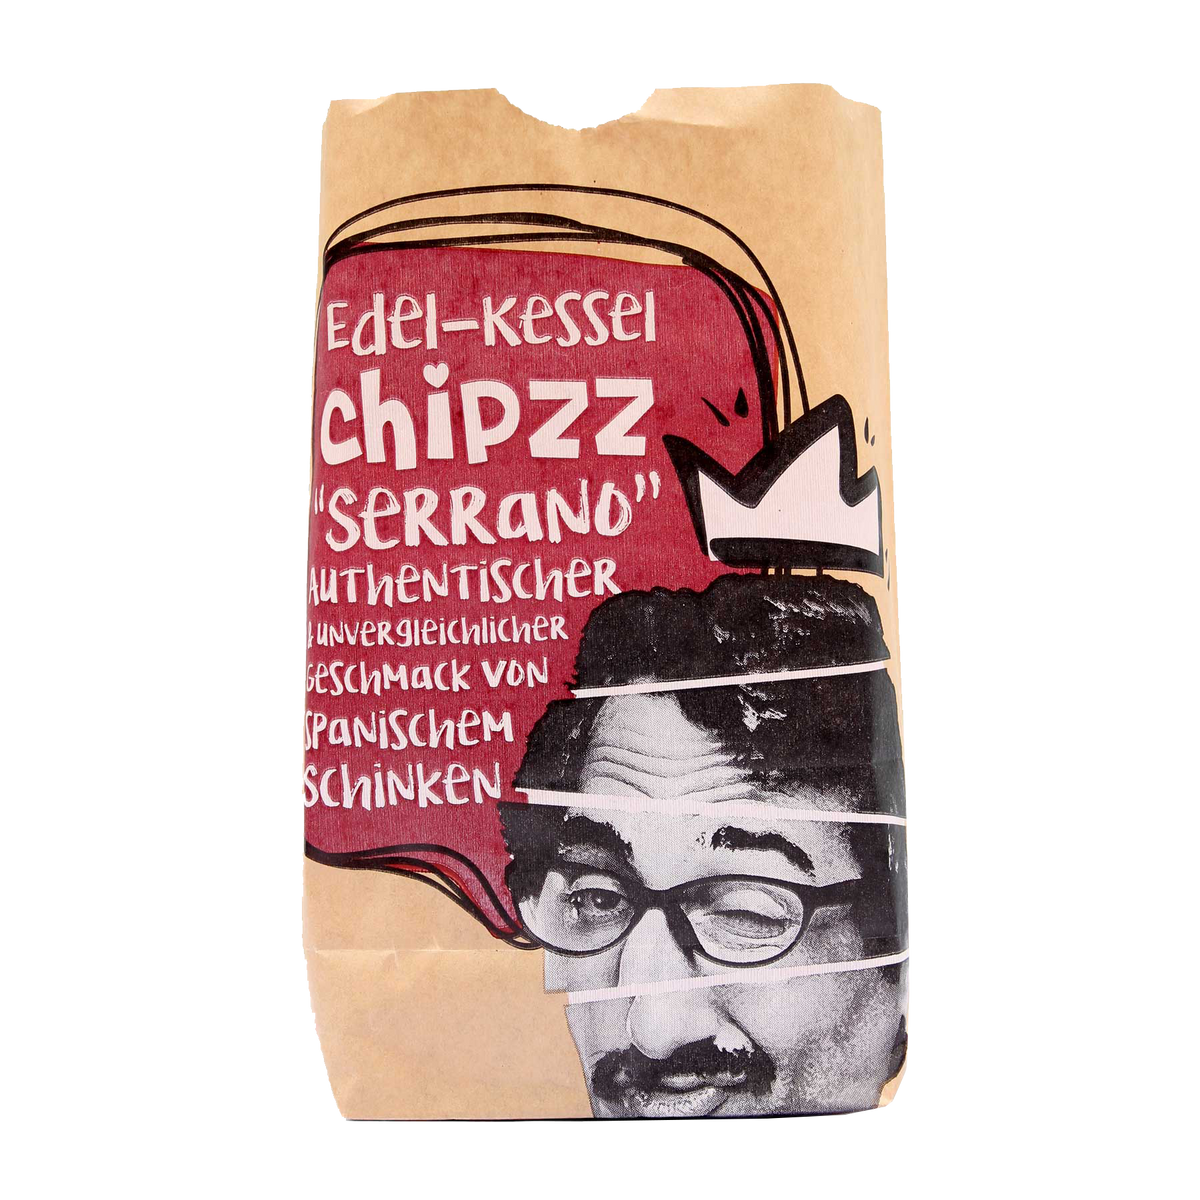 CHIPZZ Serrano 150g (5.3oz) sharing bag